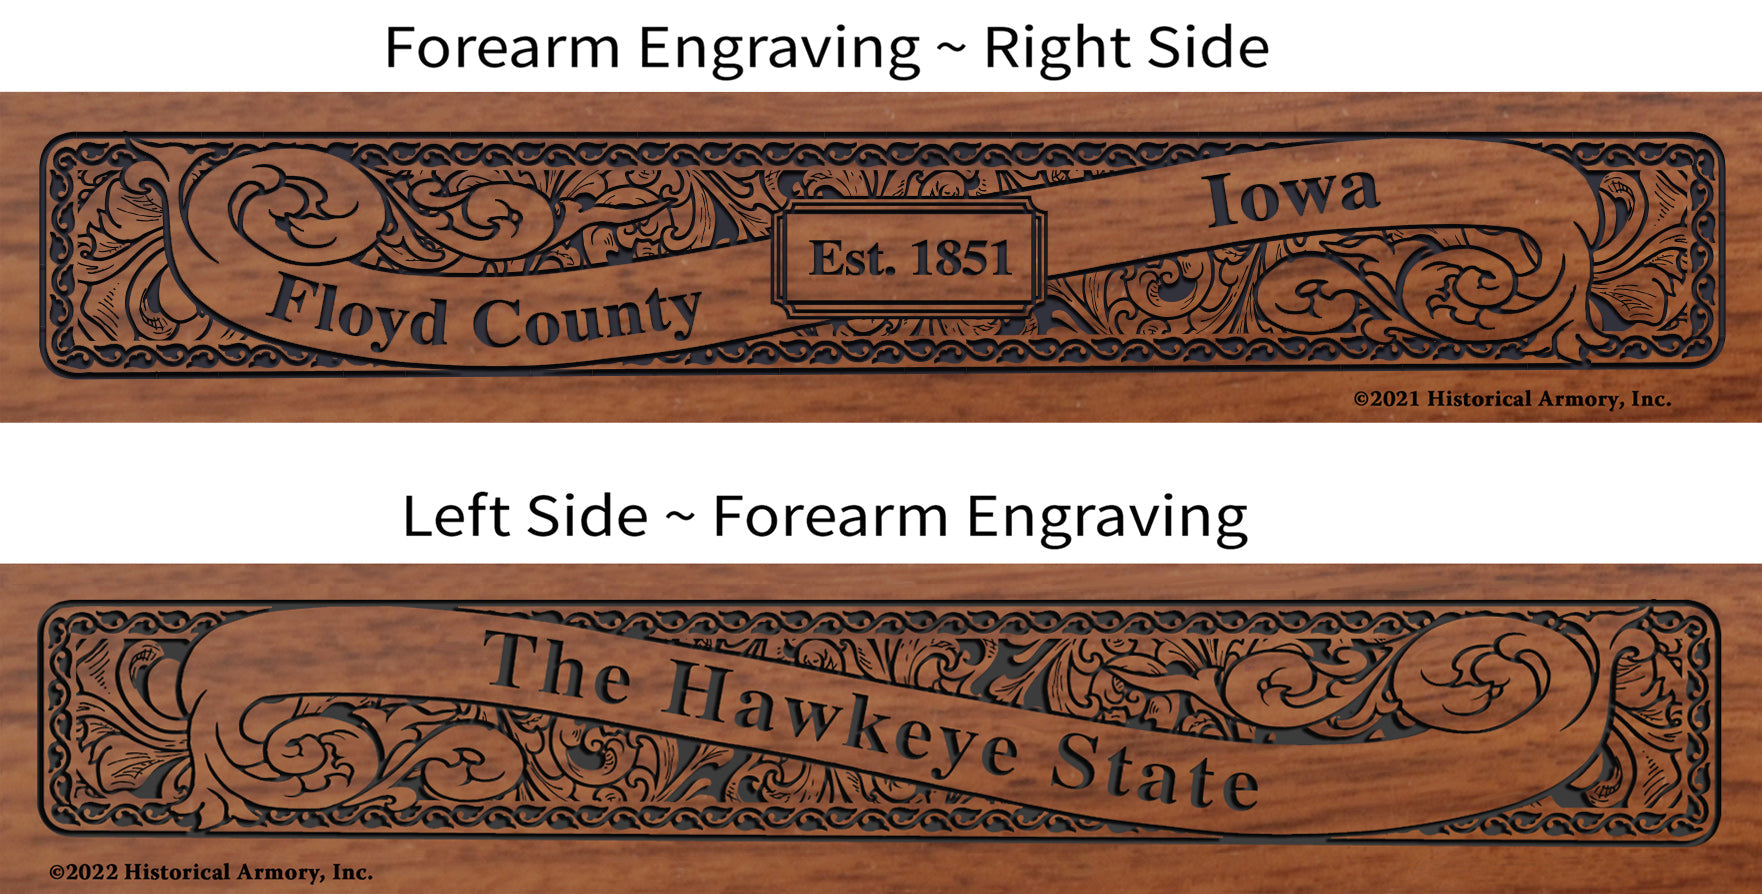 Floyd County Iowa Engraved Rifle Forearm